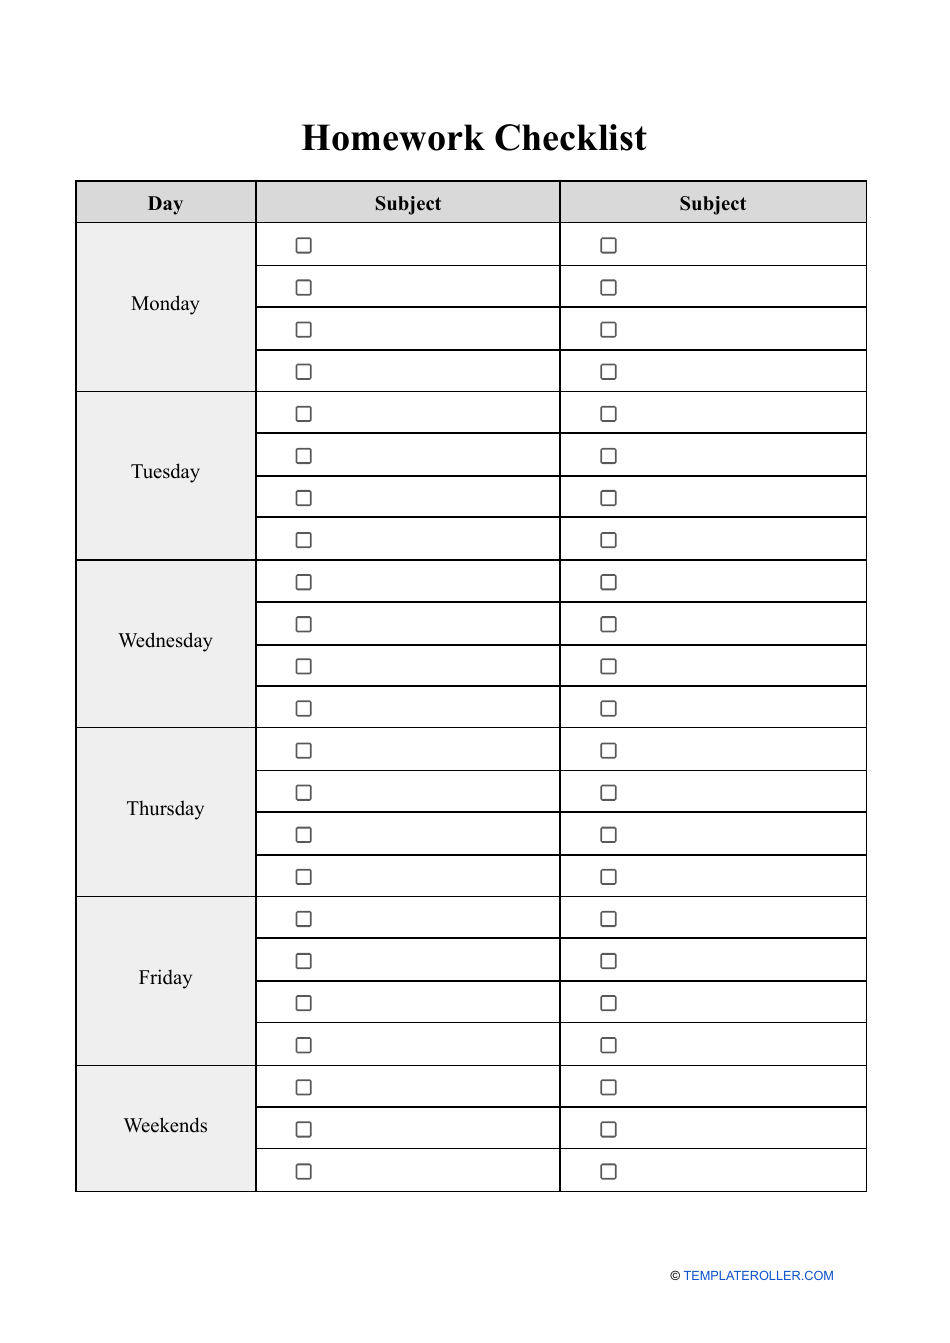 Homework Checklist Document Preview